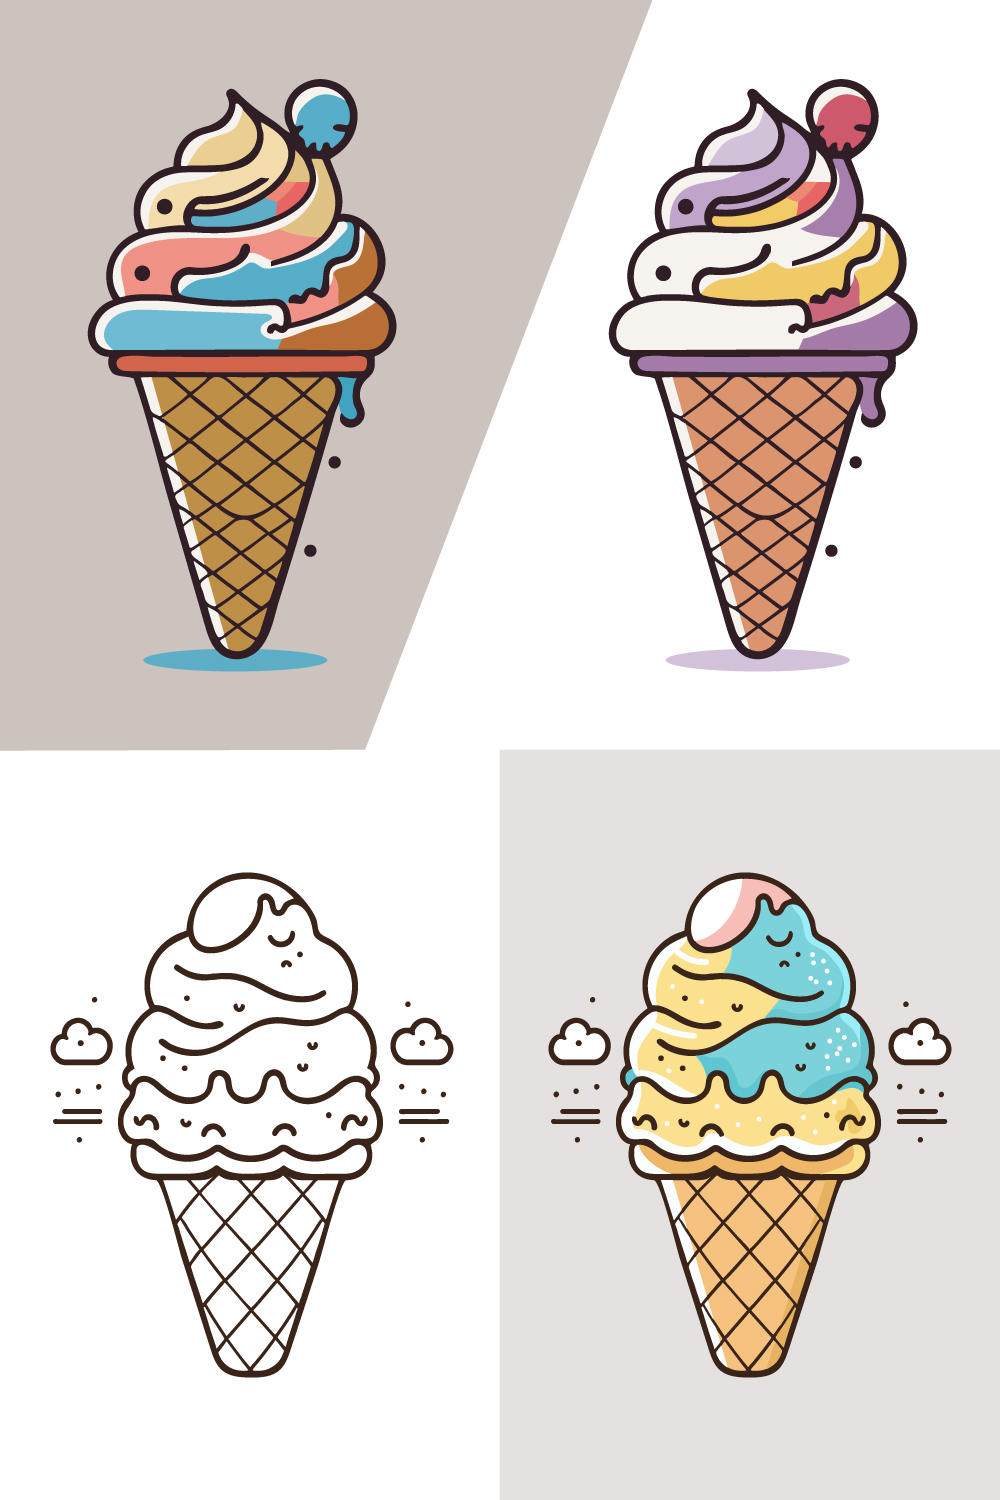 Cute Ice Cream Cartoon line art vector Icon illustration, Food drink Flat Cartoon Concept Pro Vector, Ice Cream Cartoon, cone, cartoon ice cream, Cute Ice Cream logo pinterest preview image.